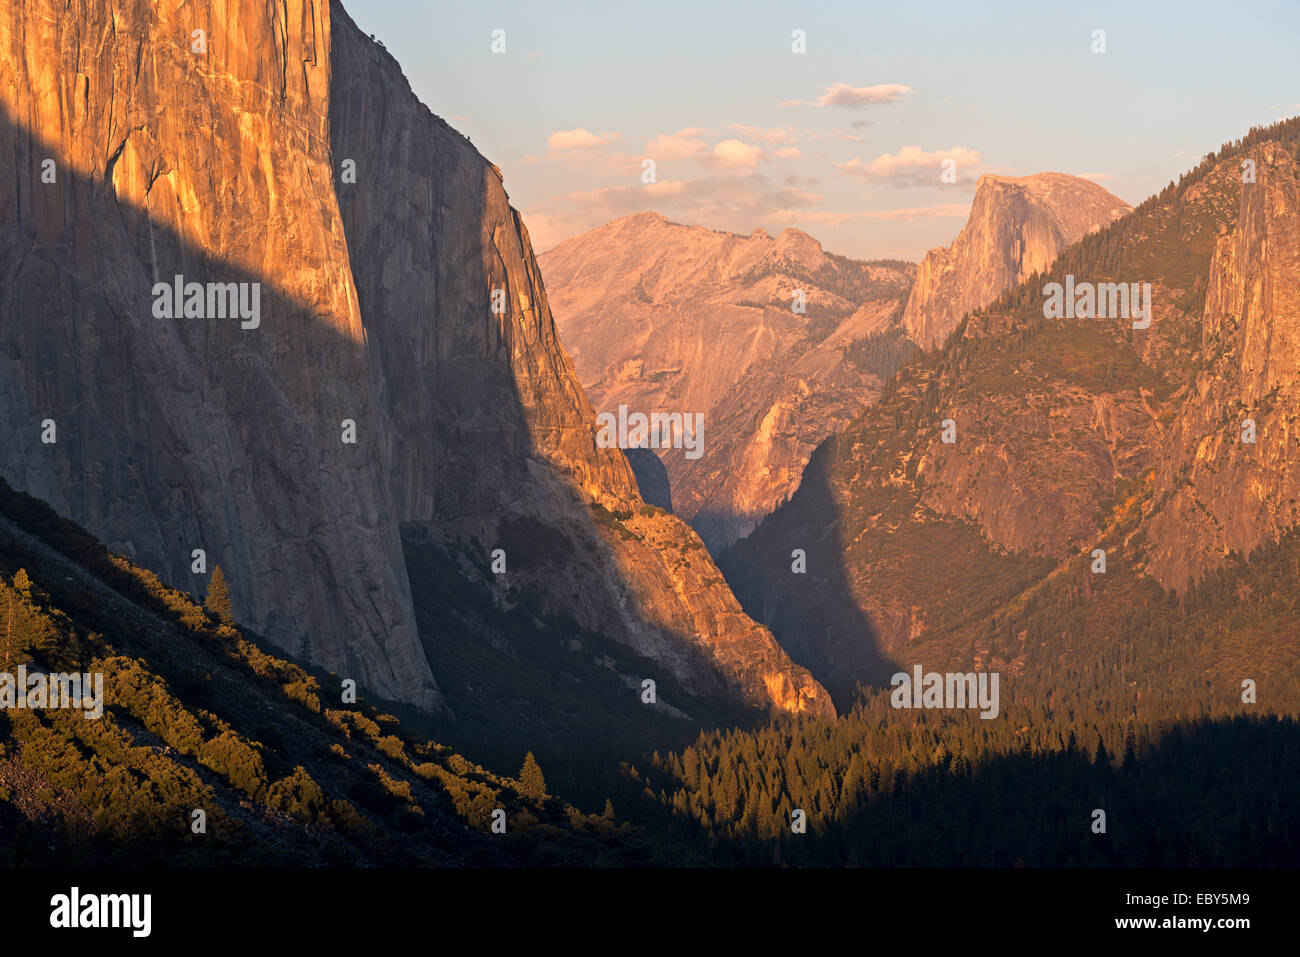 Golden evening sunshine illuminates El Capitan and Half Dome in Yosemite Valley, California, USA. Autumn (October) 2014. Stock Photo